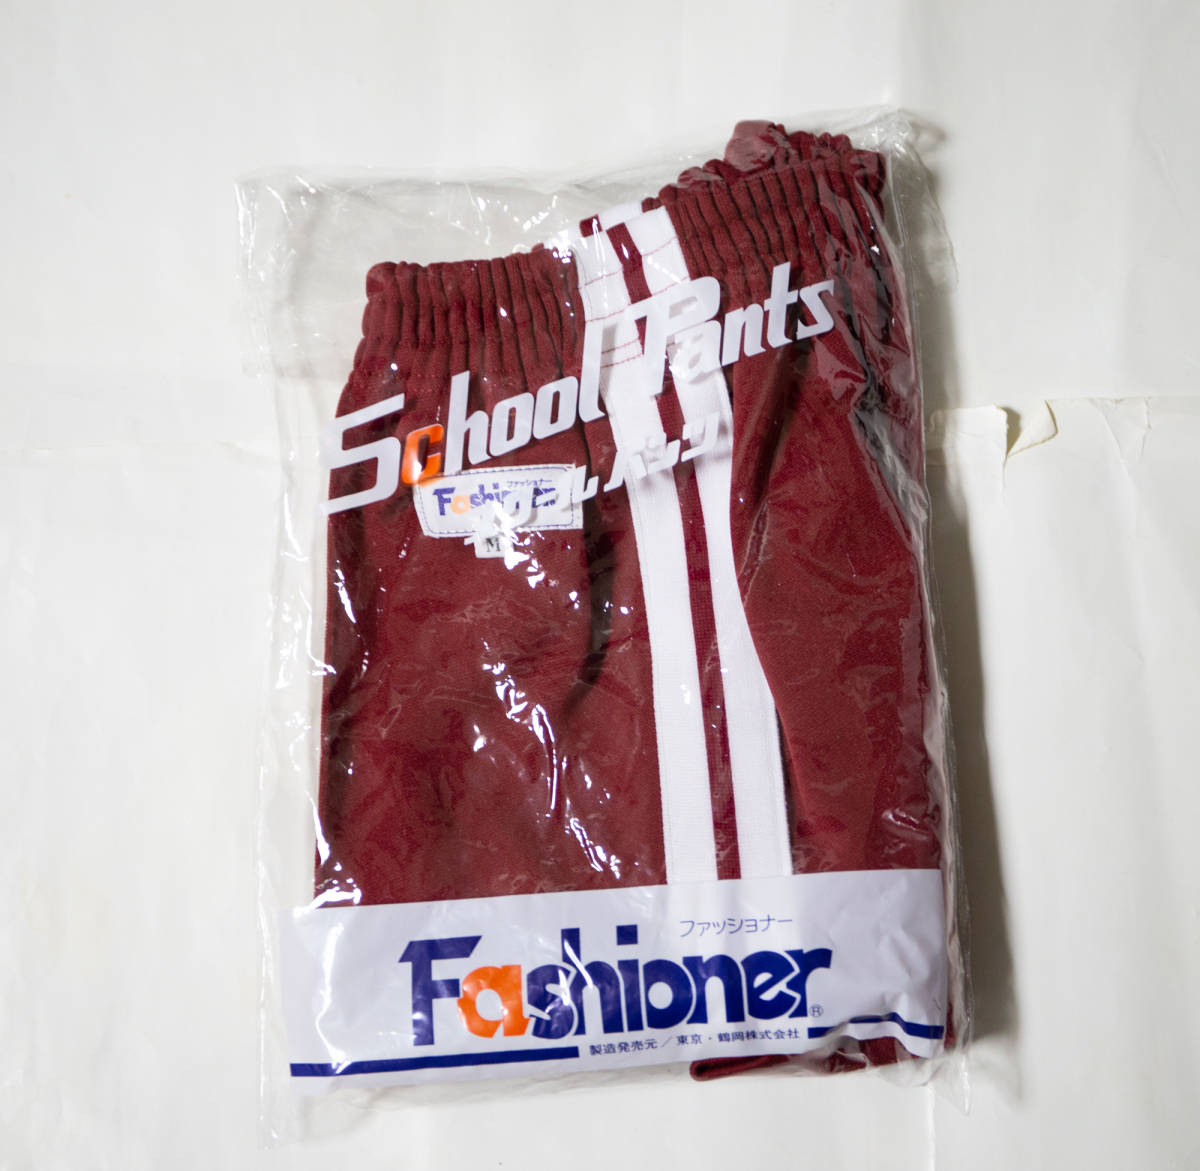  gym uniform *fashona- jersey short bread dark red × white 2 ps line M unused goods prompt decision!